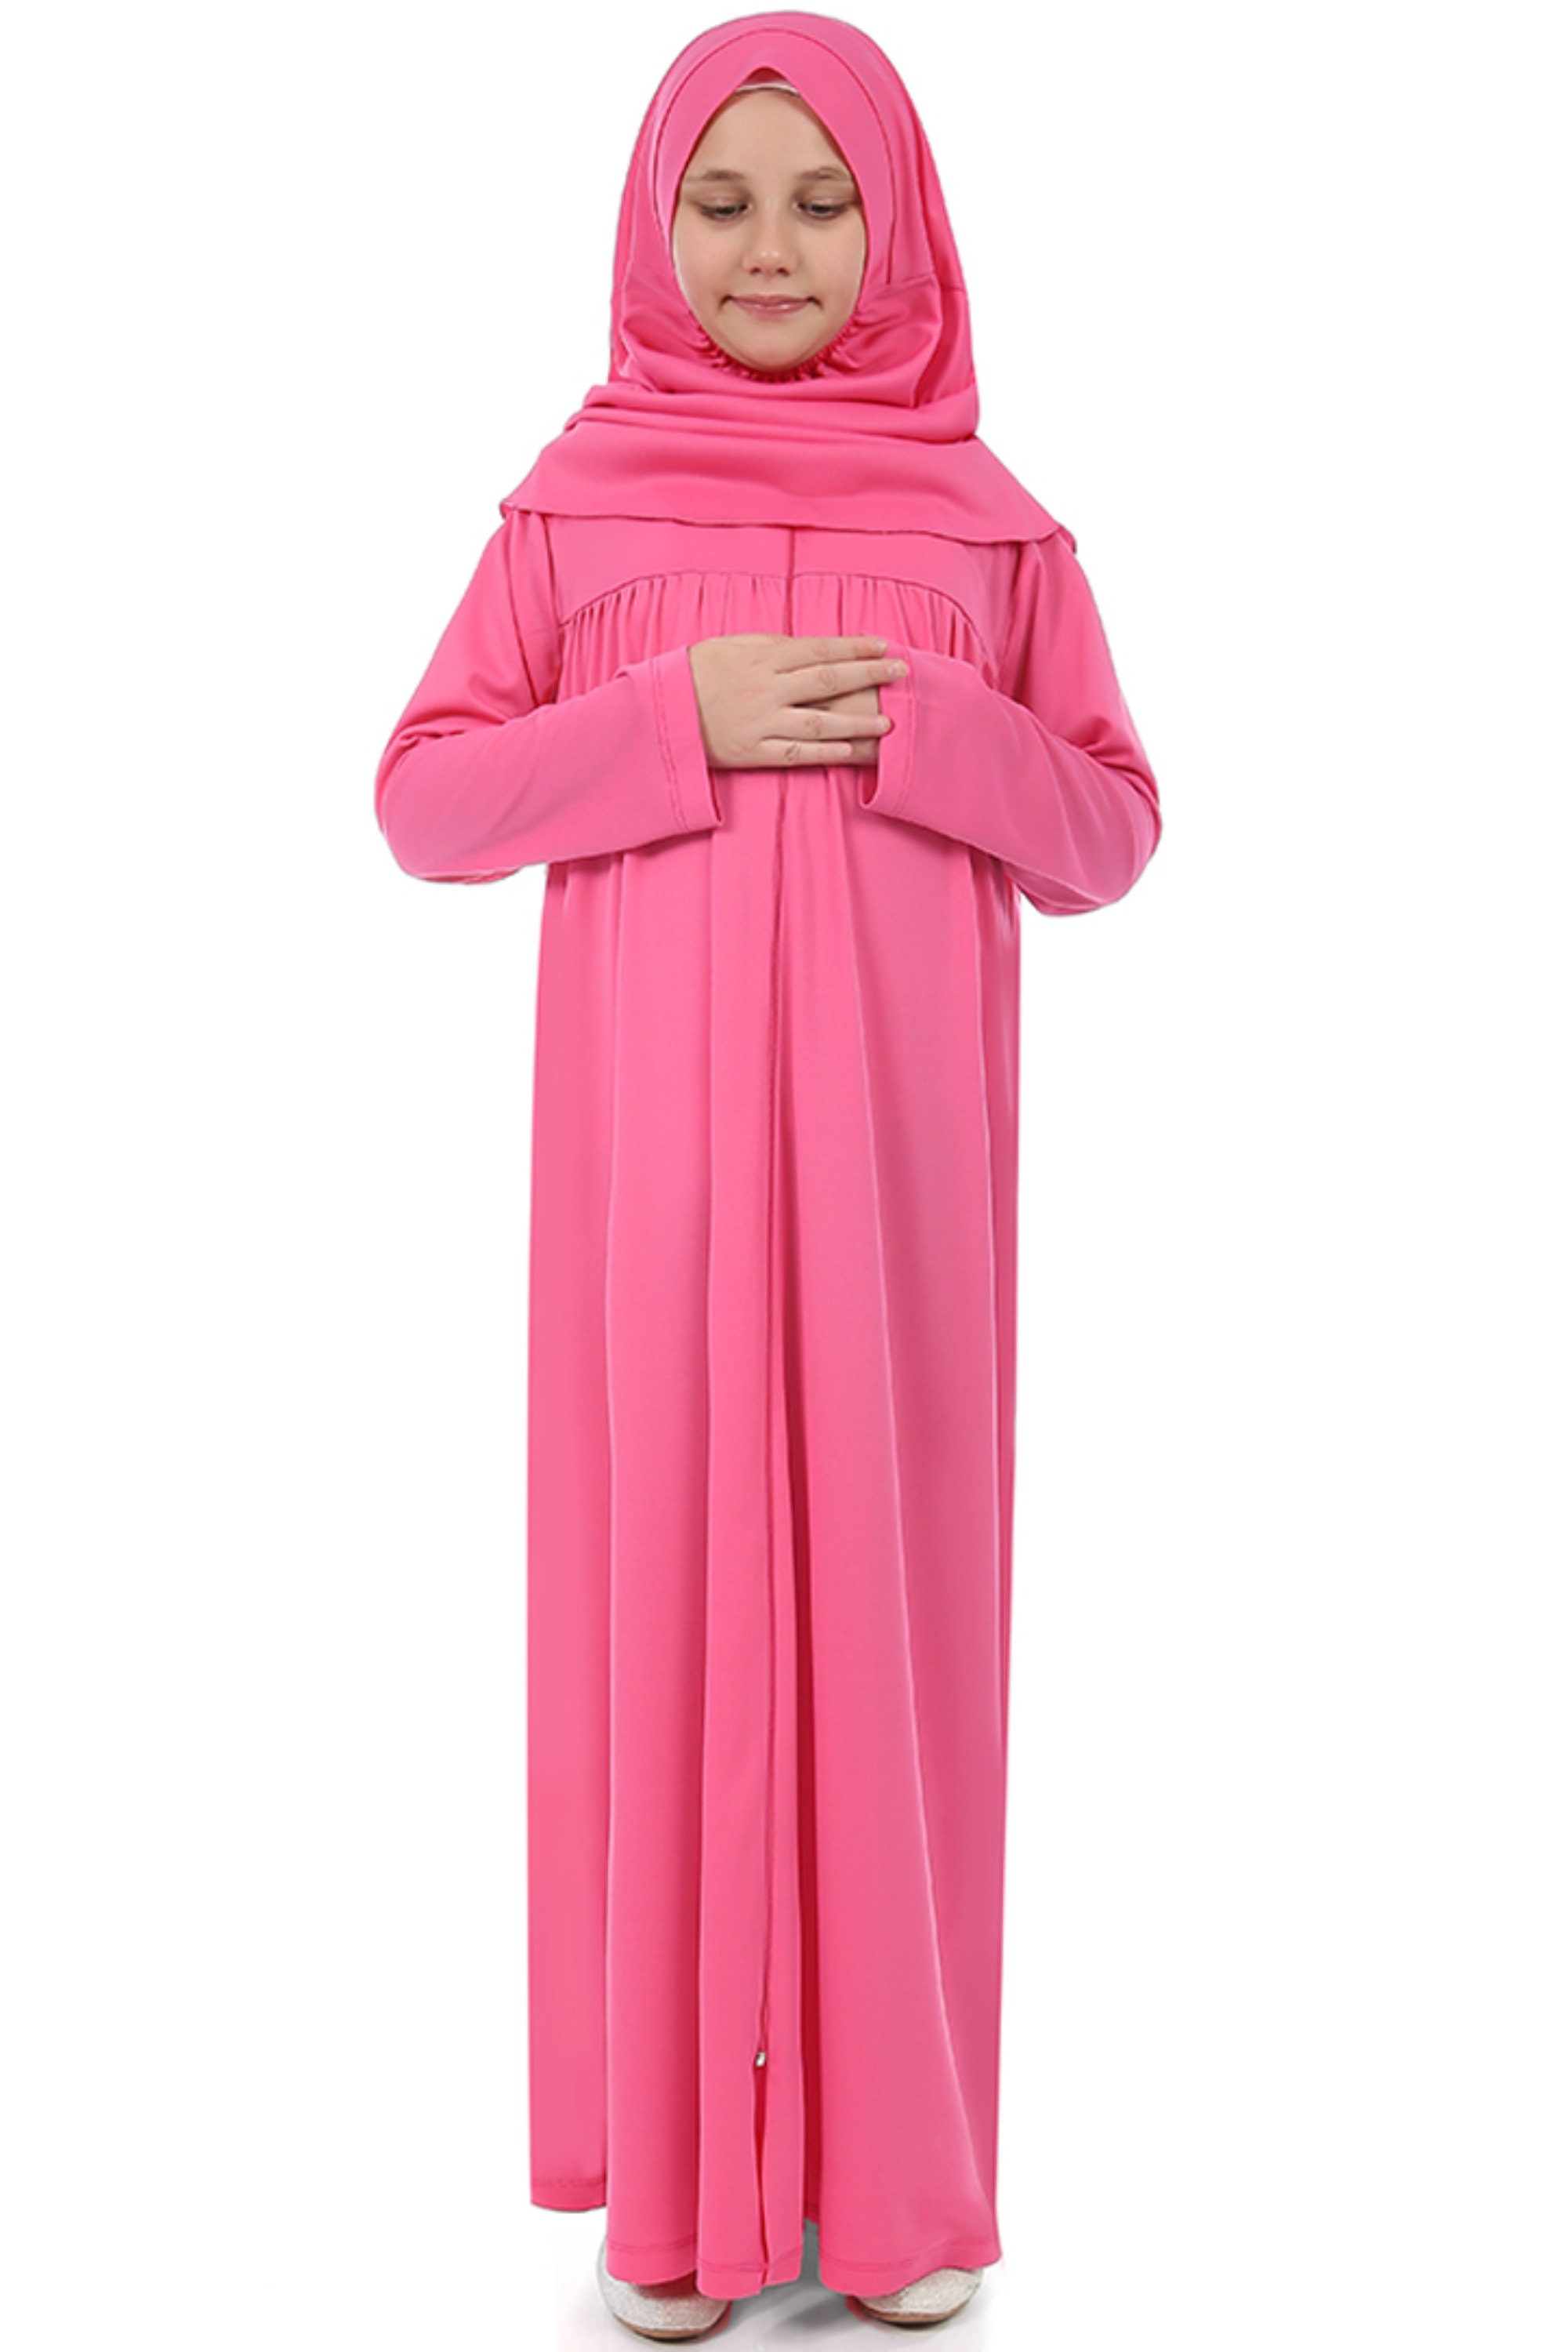 Children's Prayer Dress Baby Hijab Salah Prayer Dress | Etsy